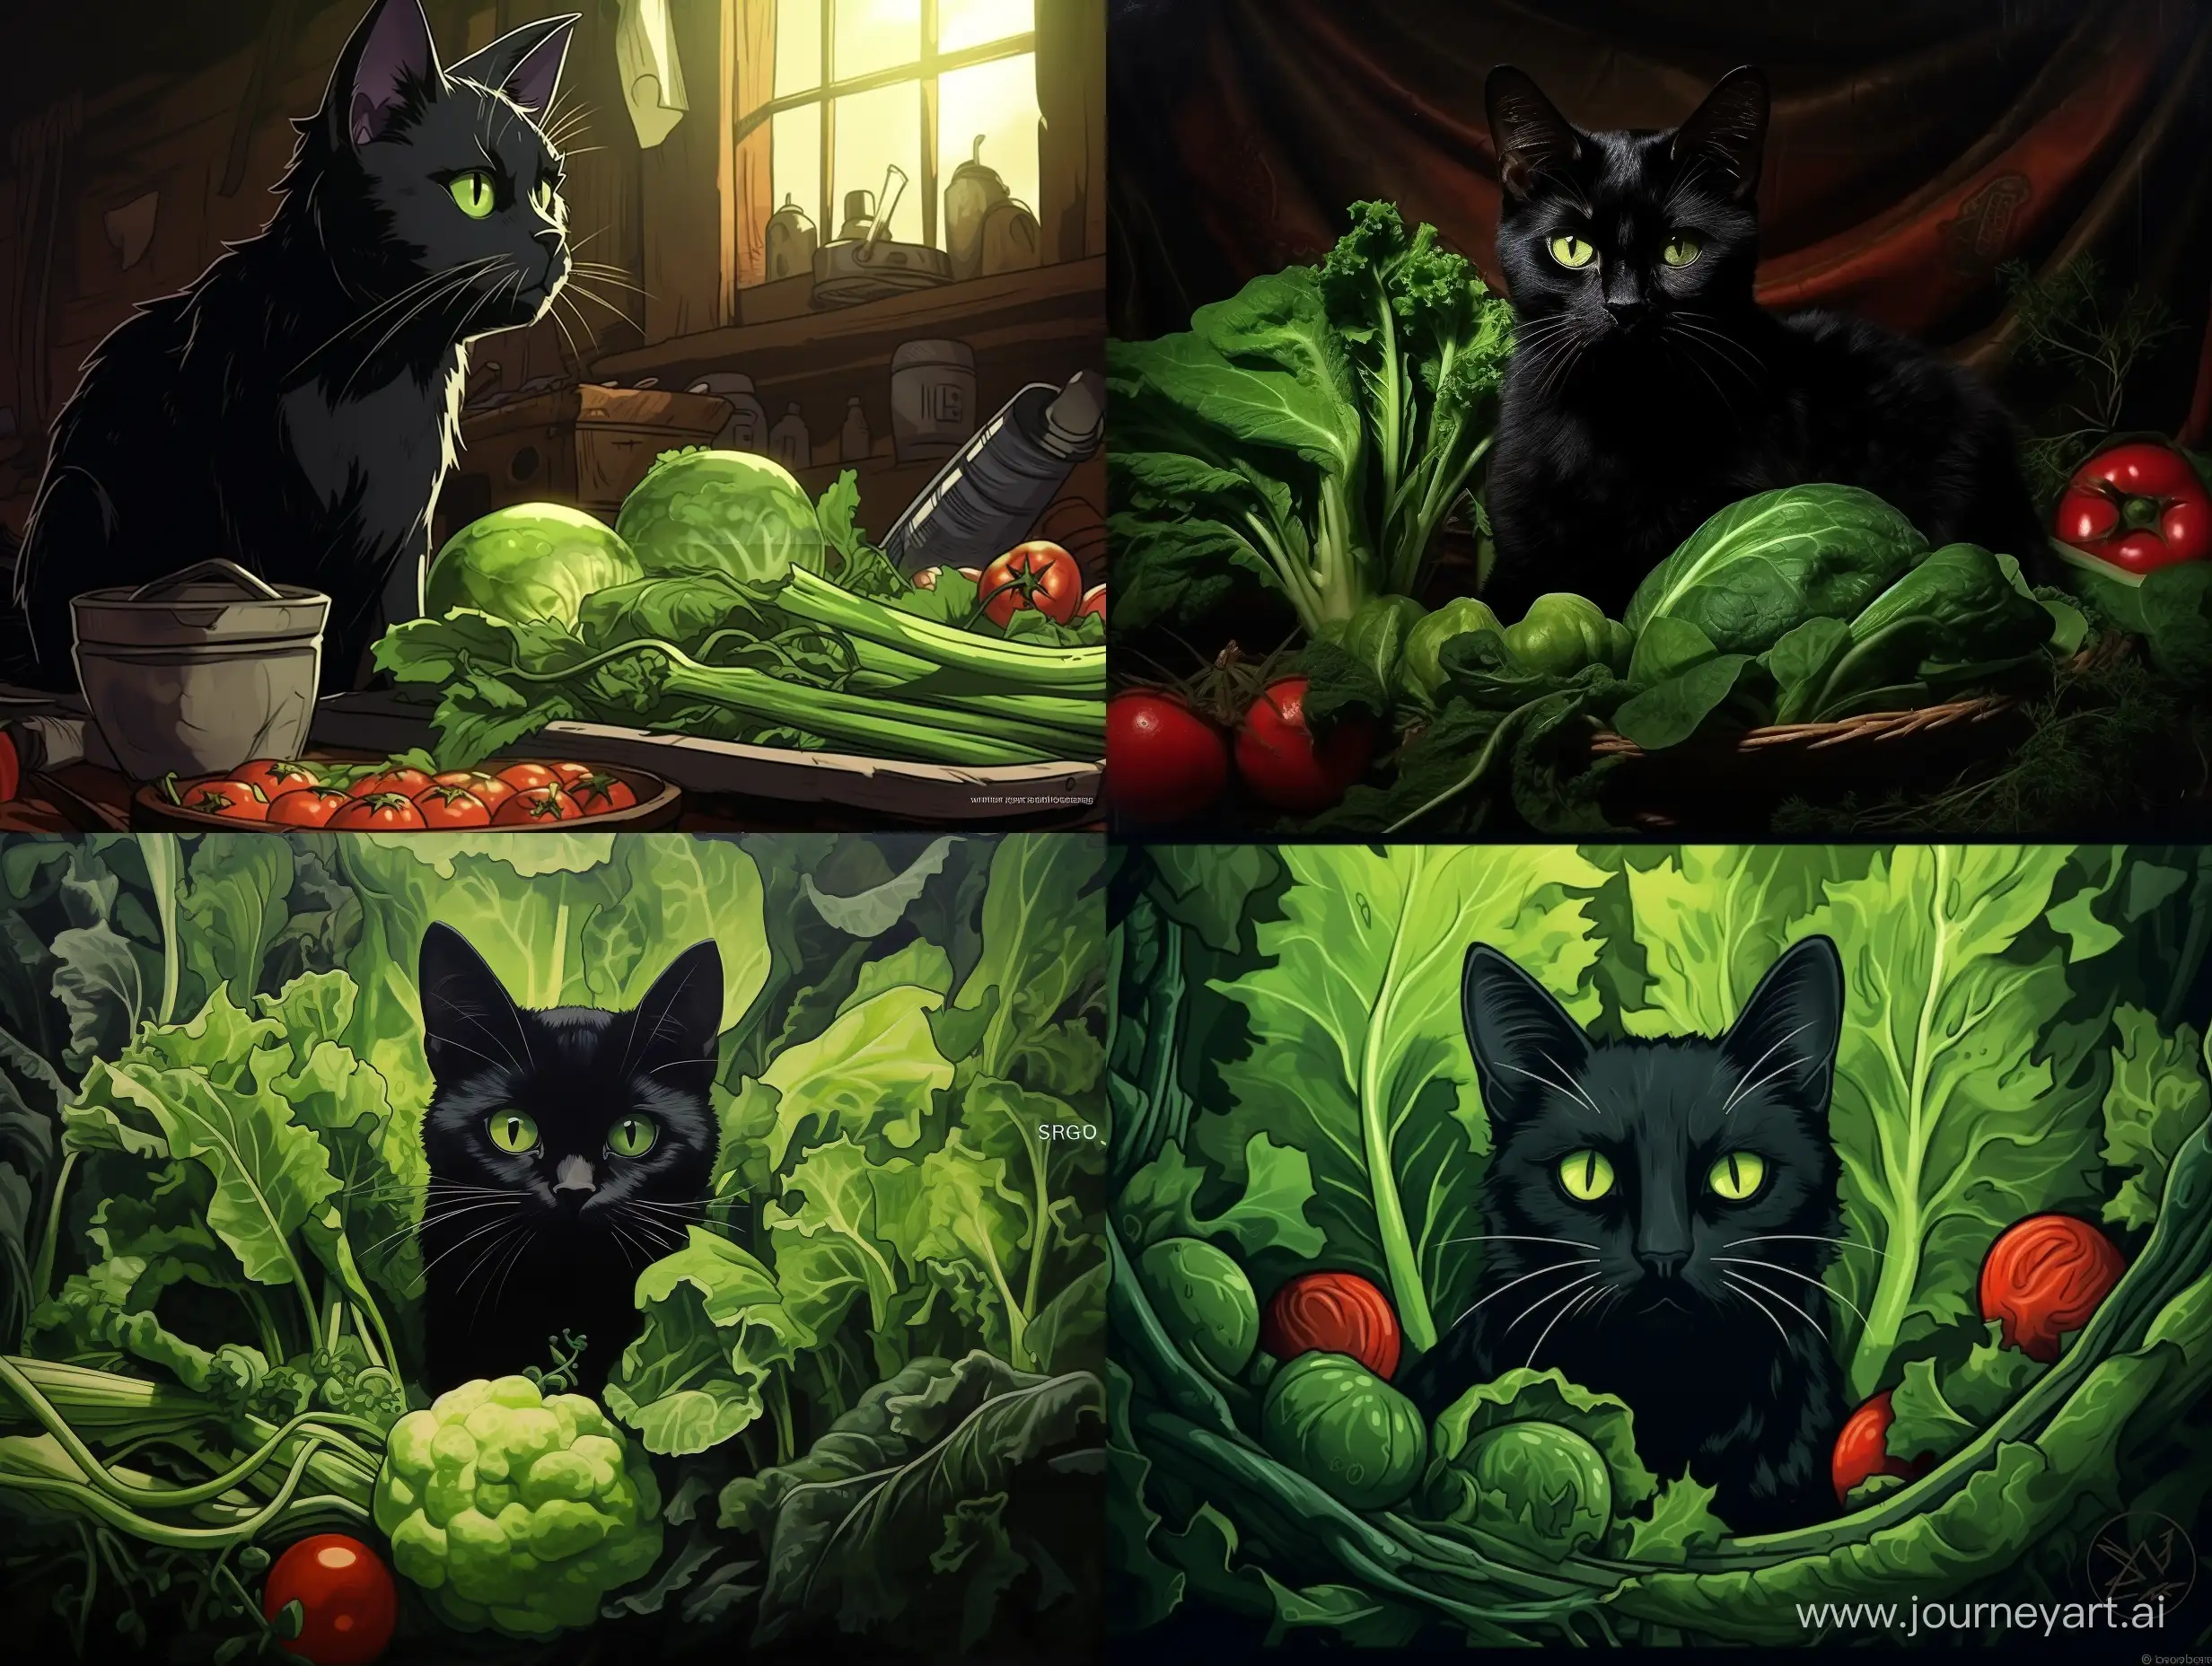 Playful-Black-Cat-Enjoying-NutrientRich-Spinach-Delight